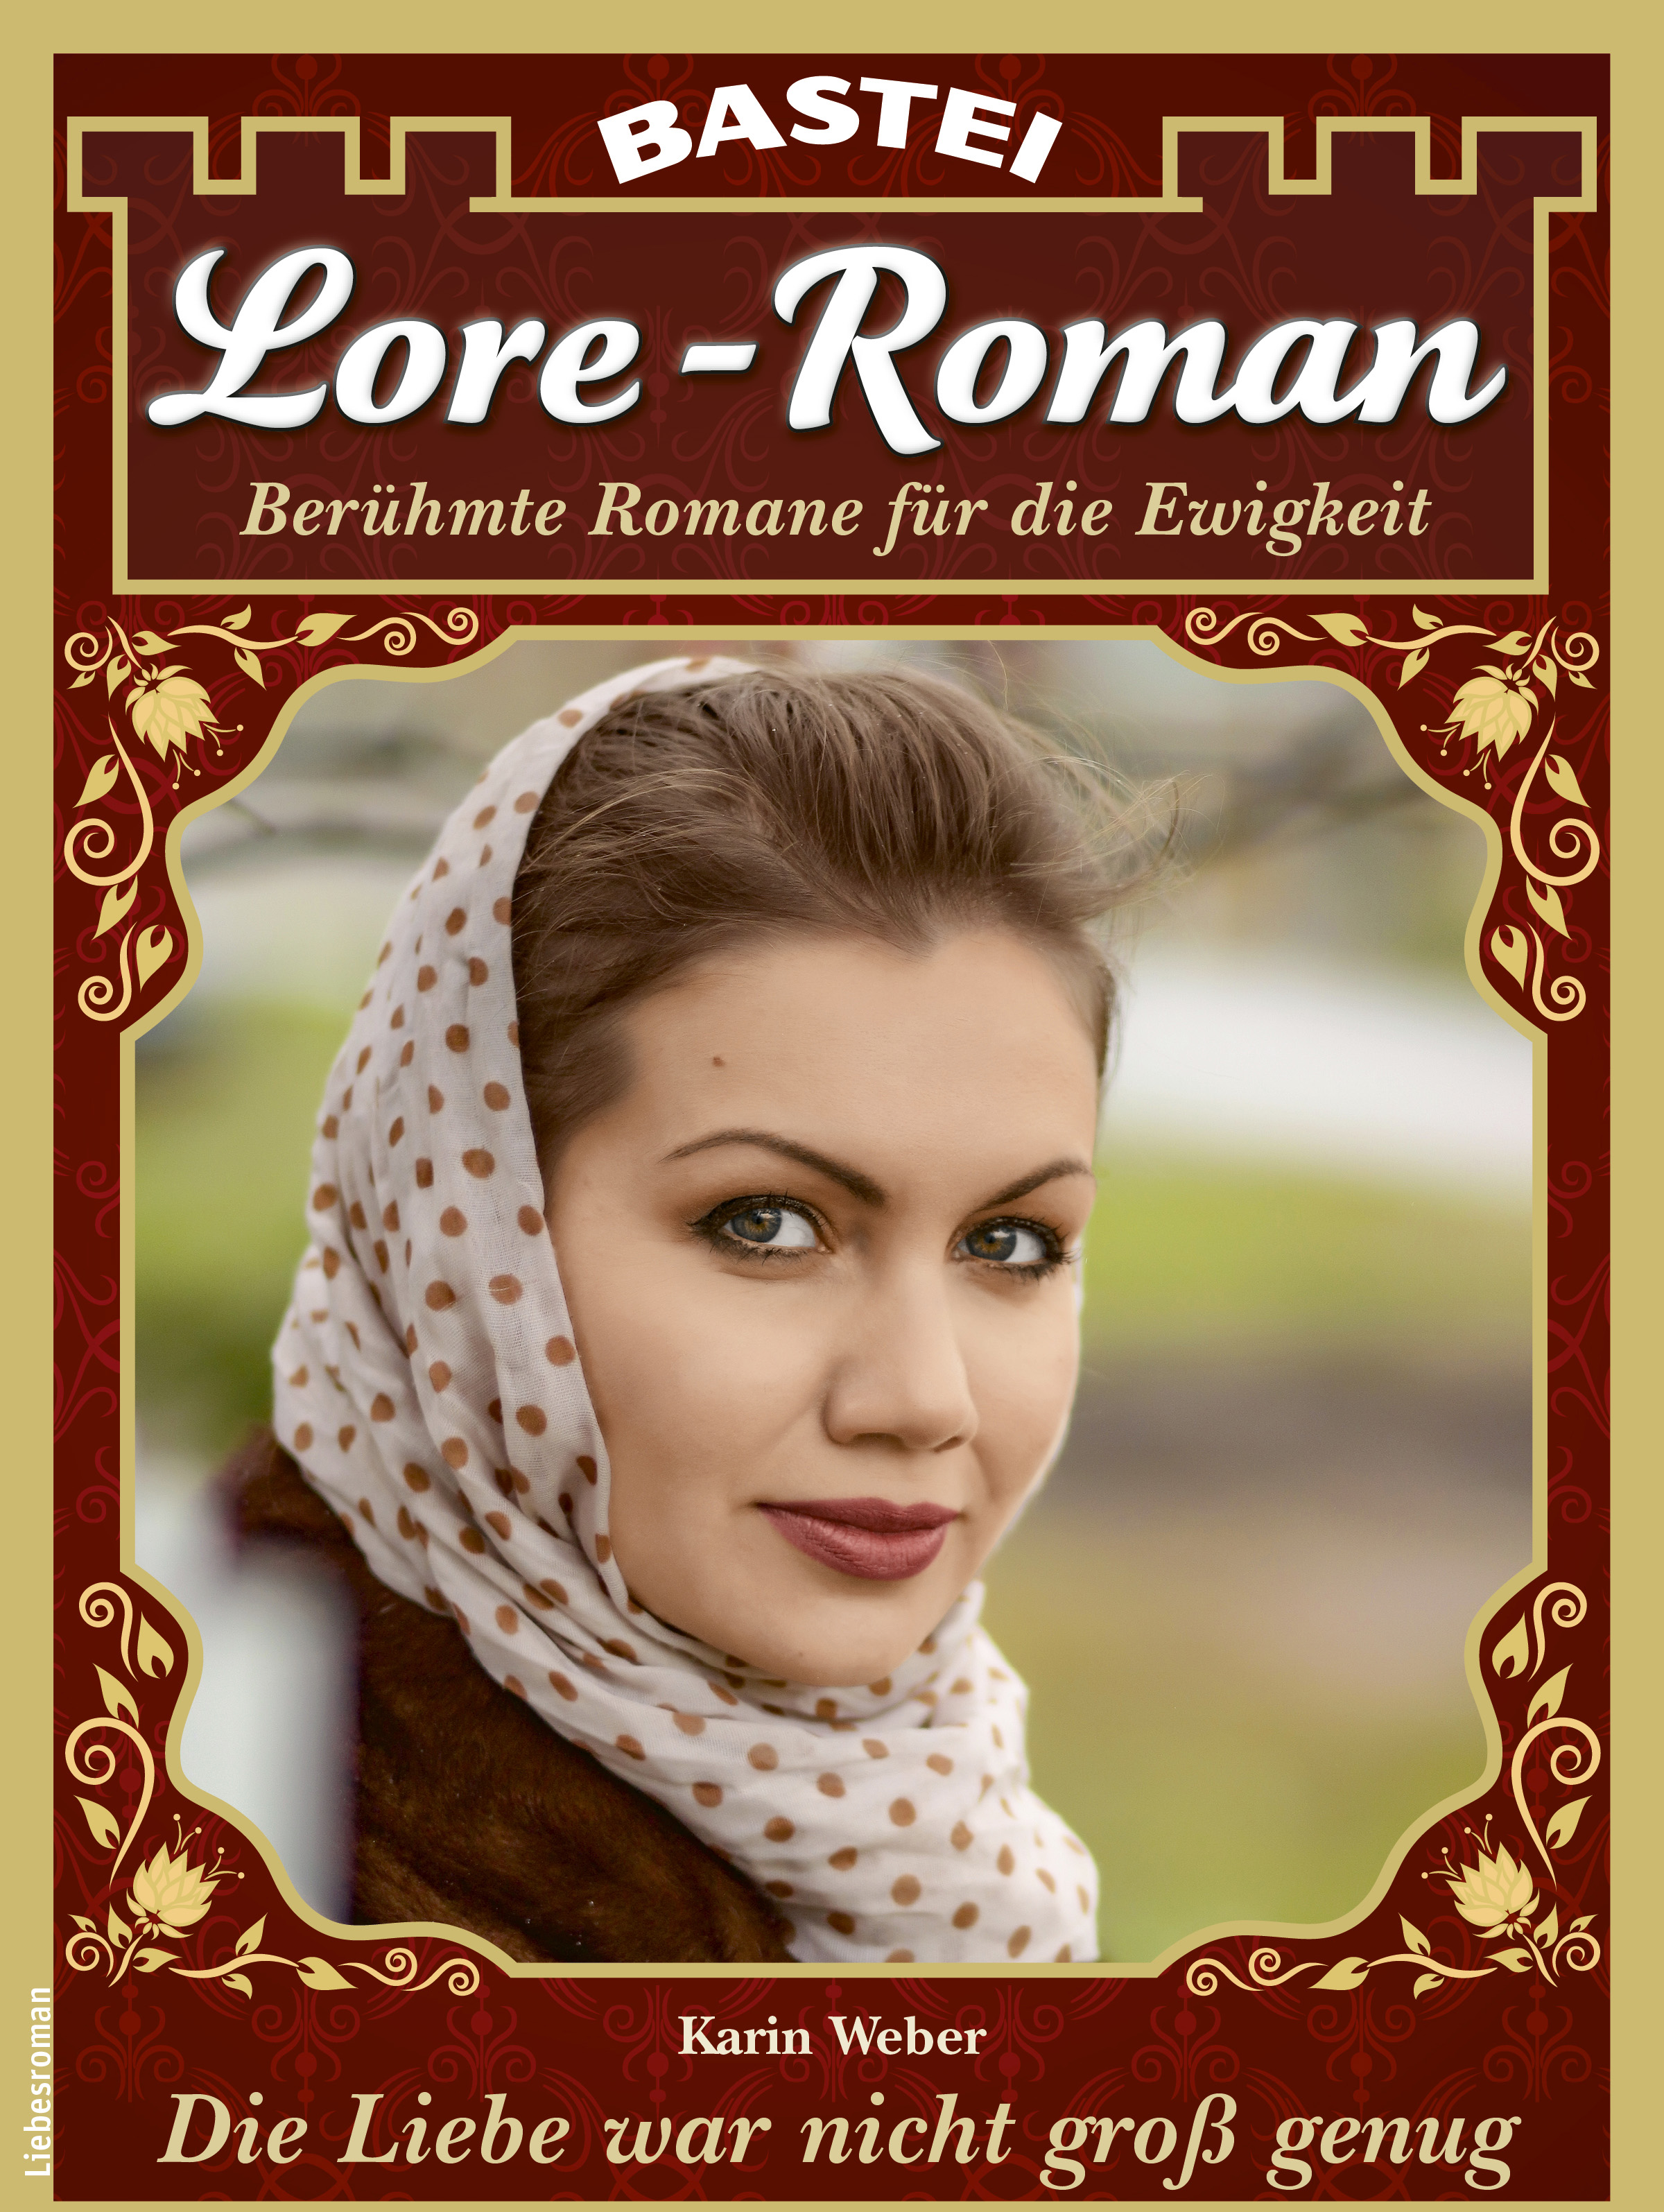 Lore-Roman 133